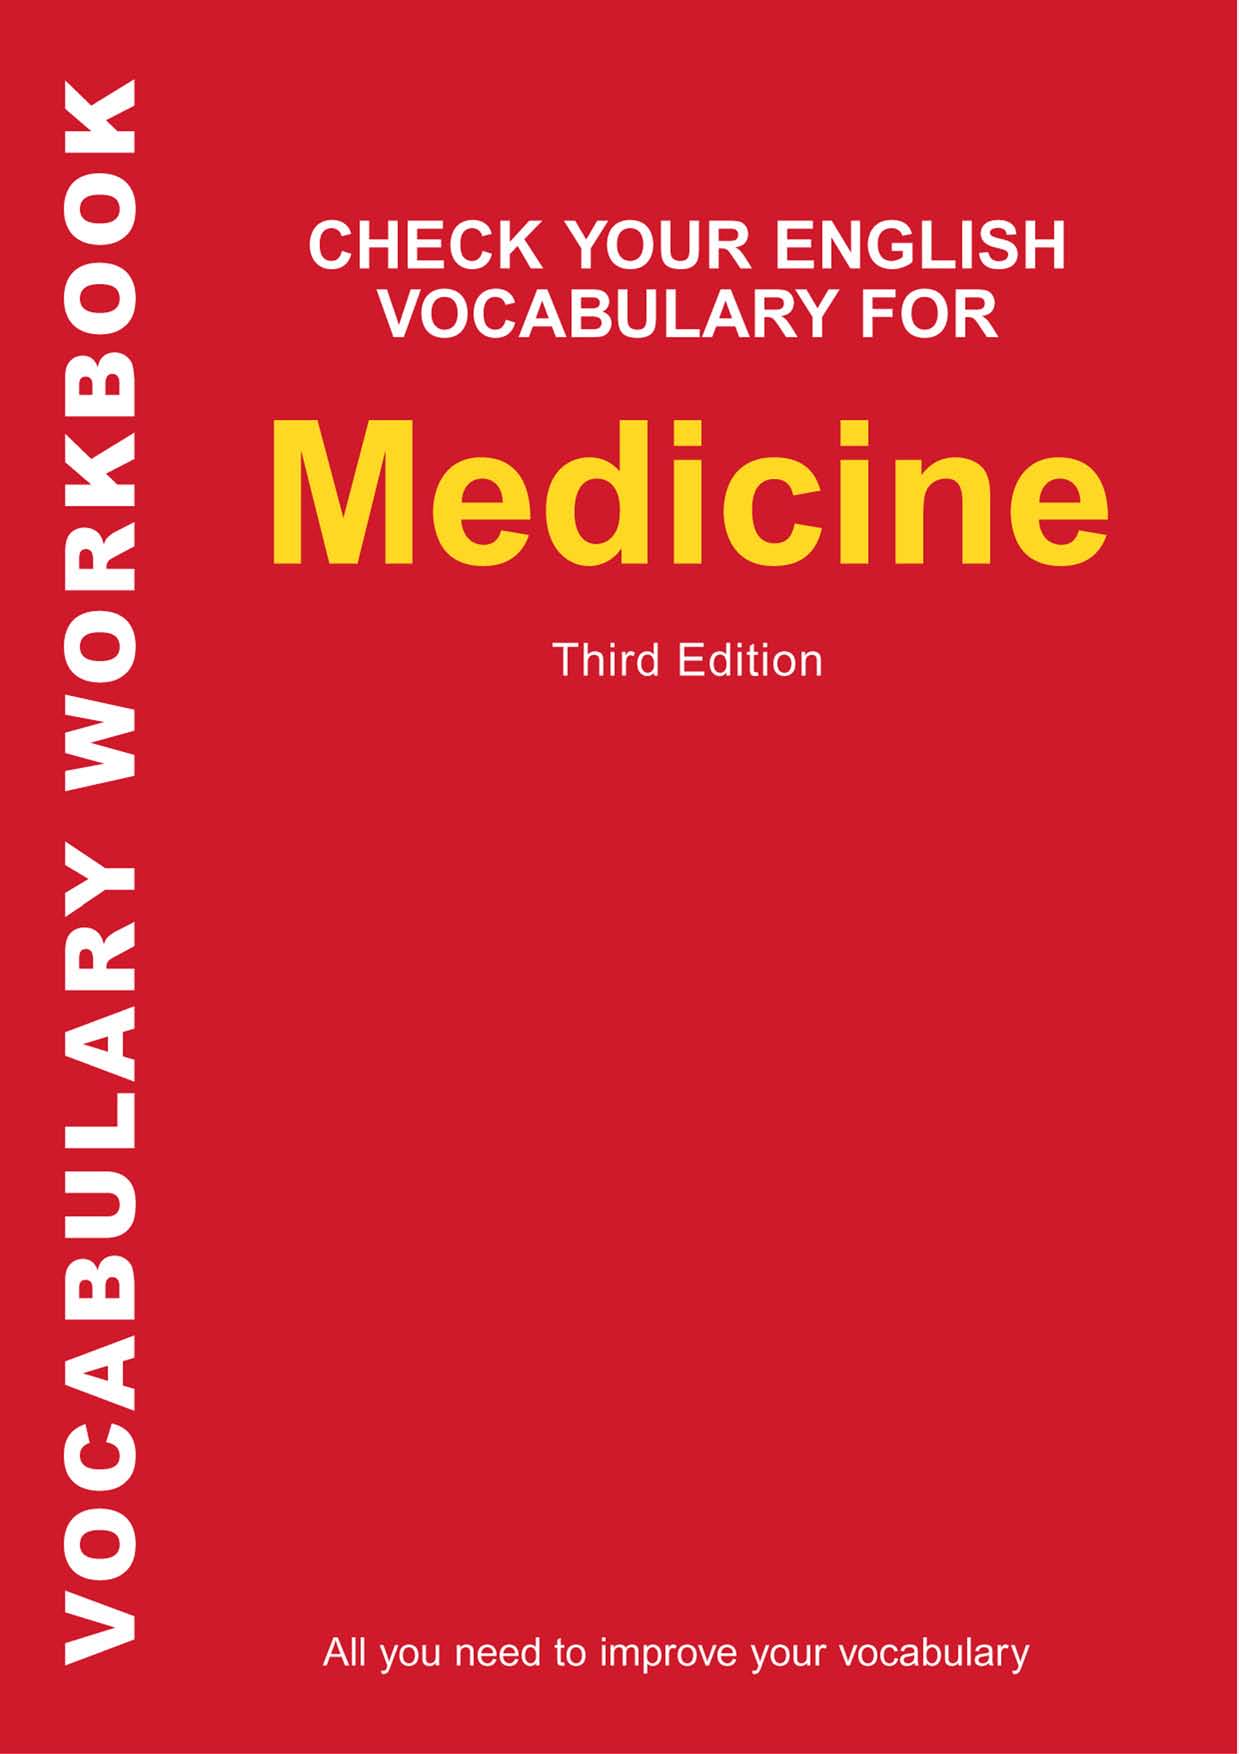 Check your english vocabulary for Medicine by Rawdon Wyatt